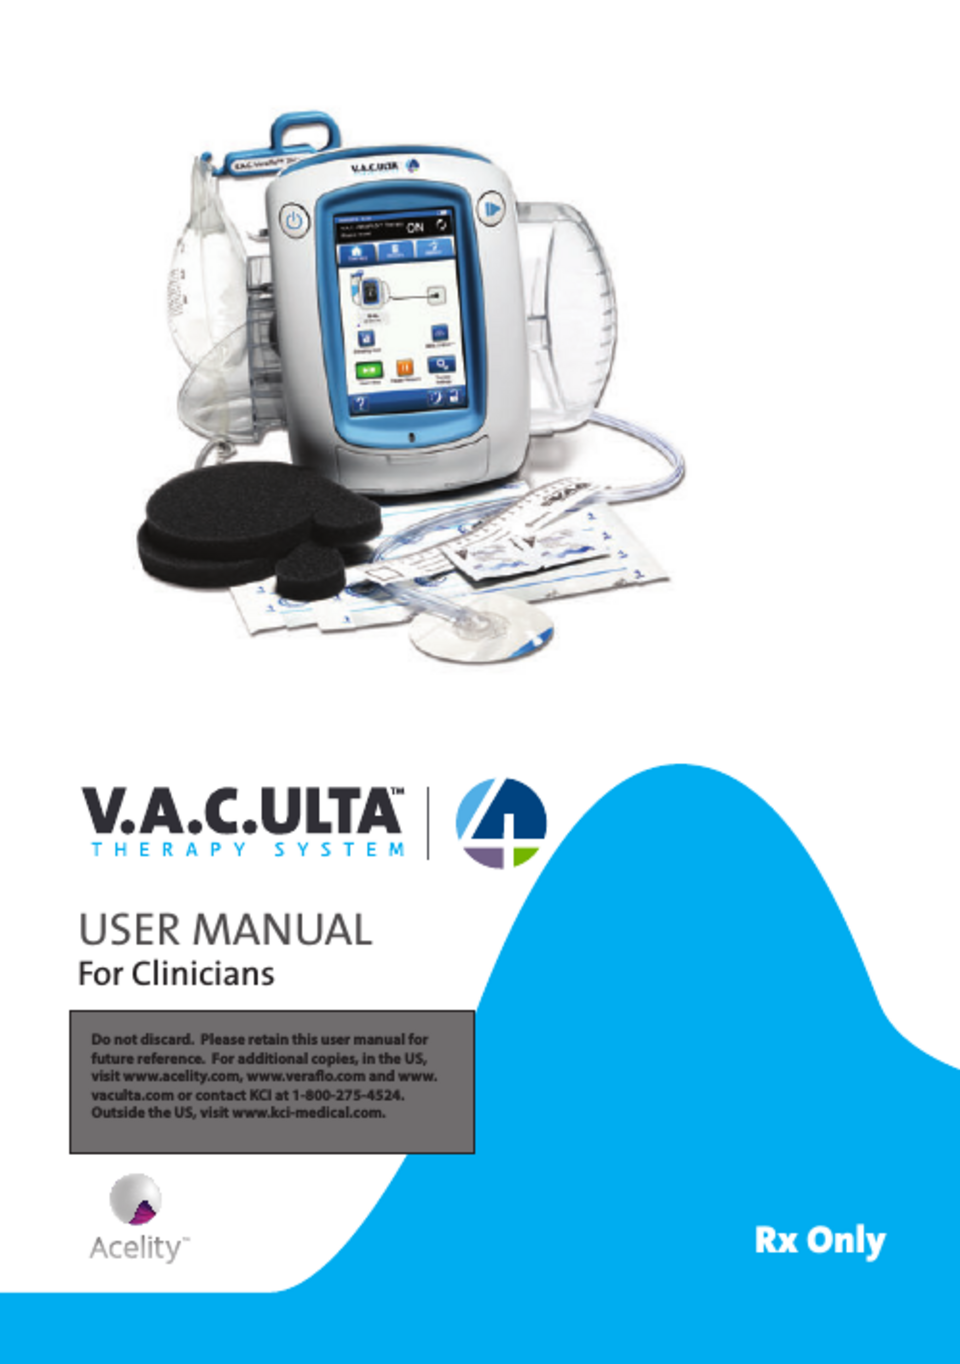 V.A.C.ULTA User Manual for Clinicians Rev C July 2017 PDF download